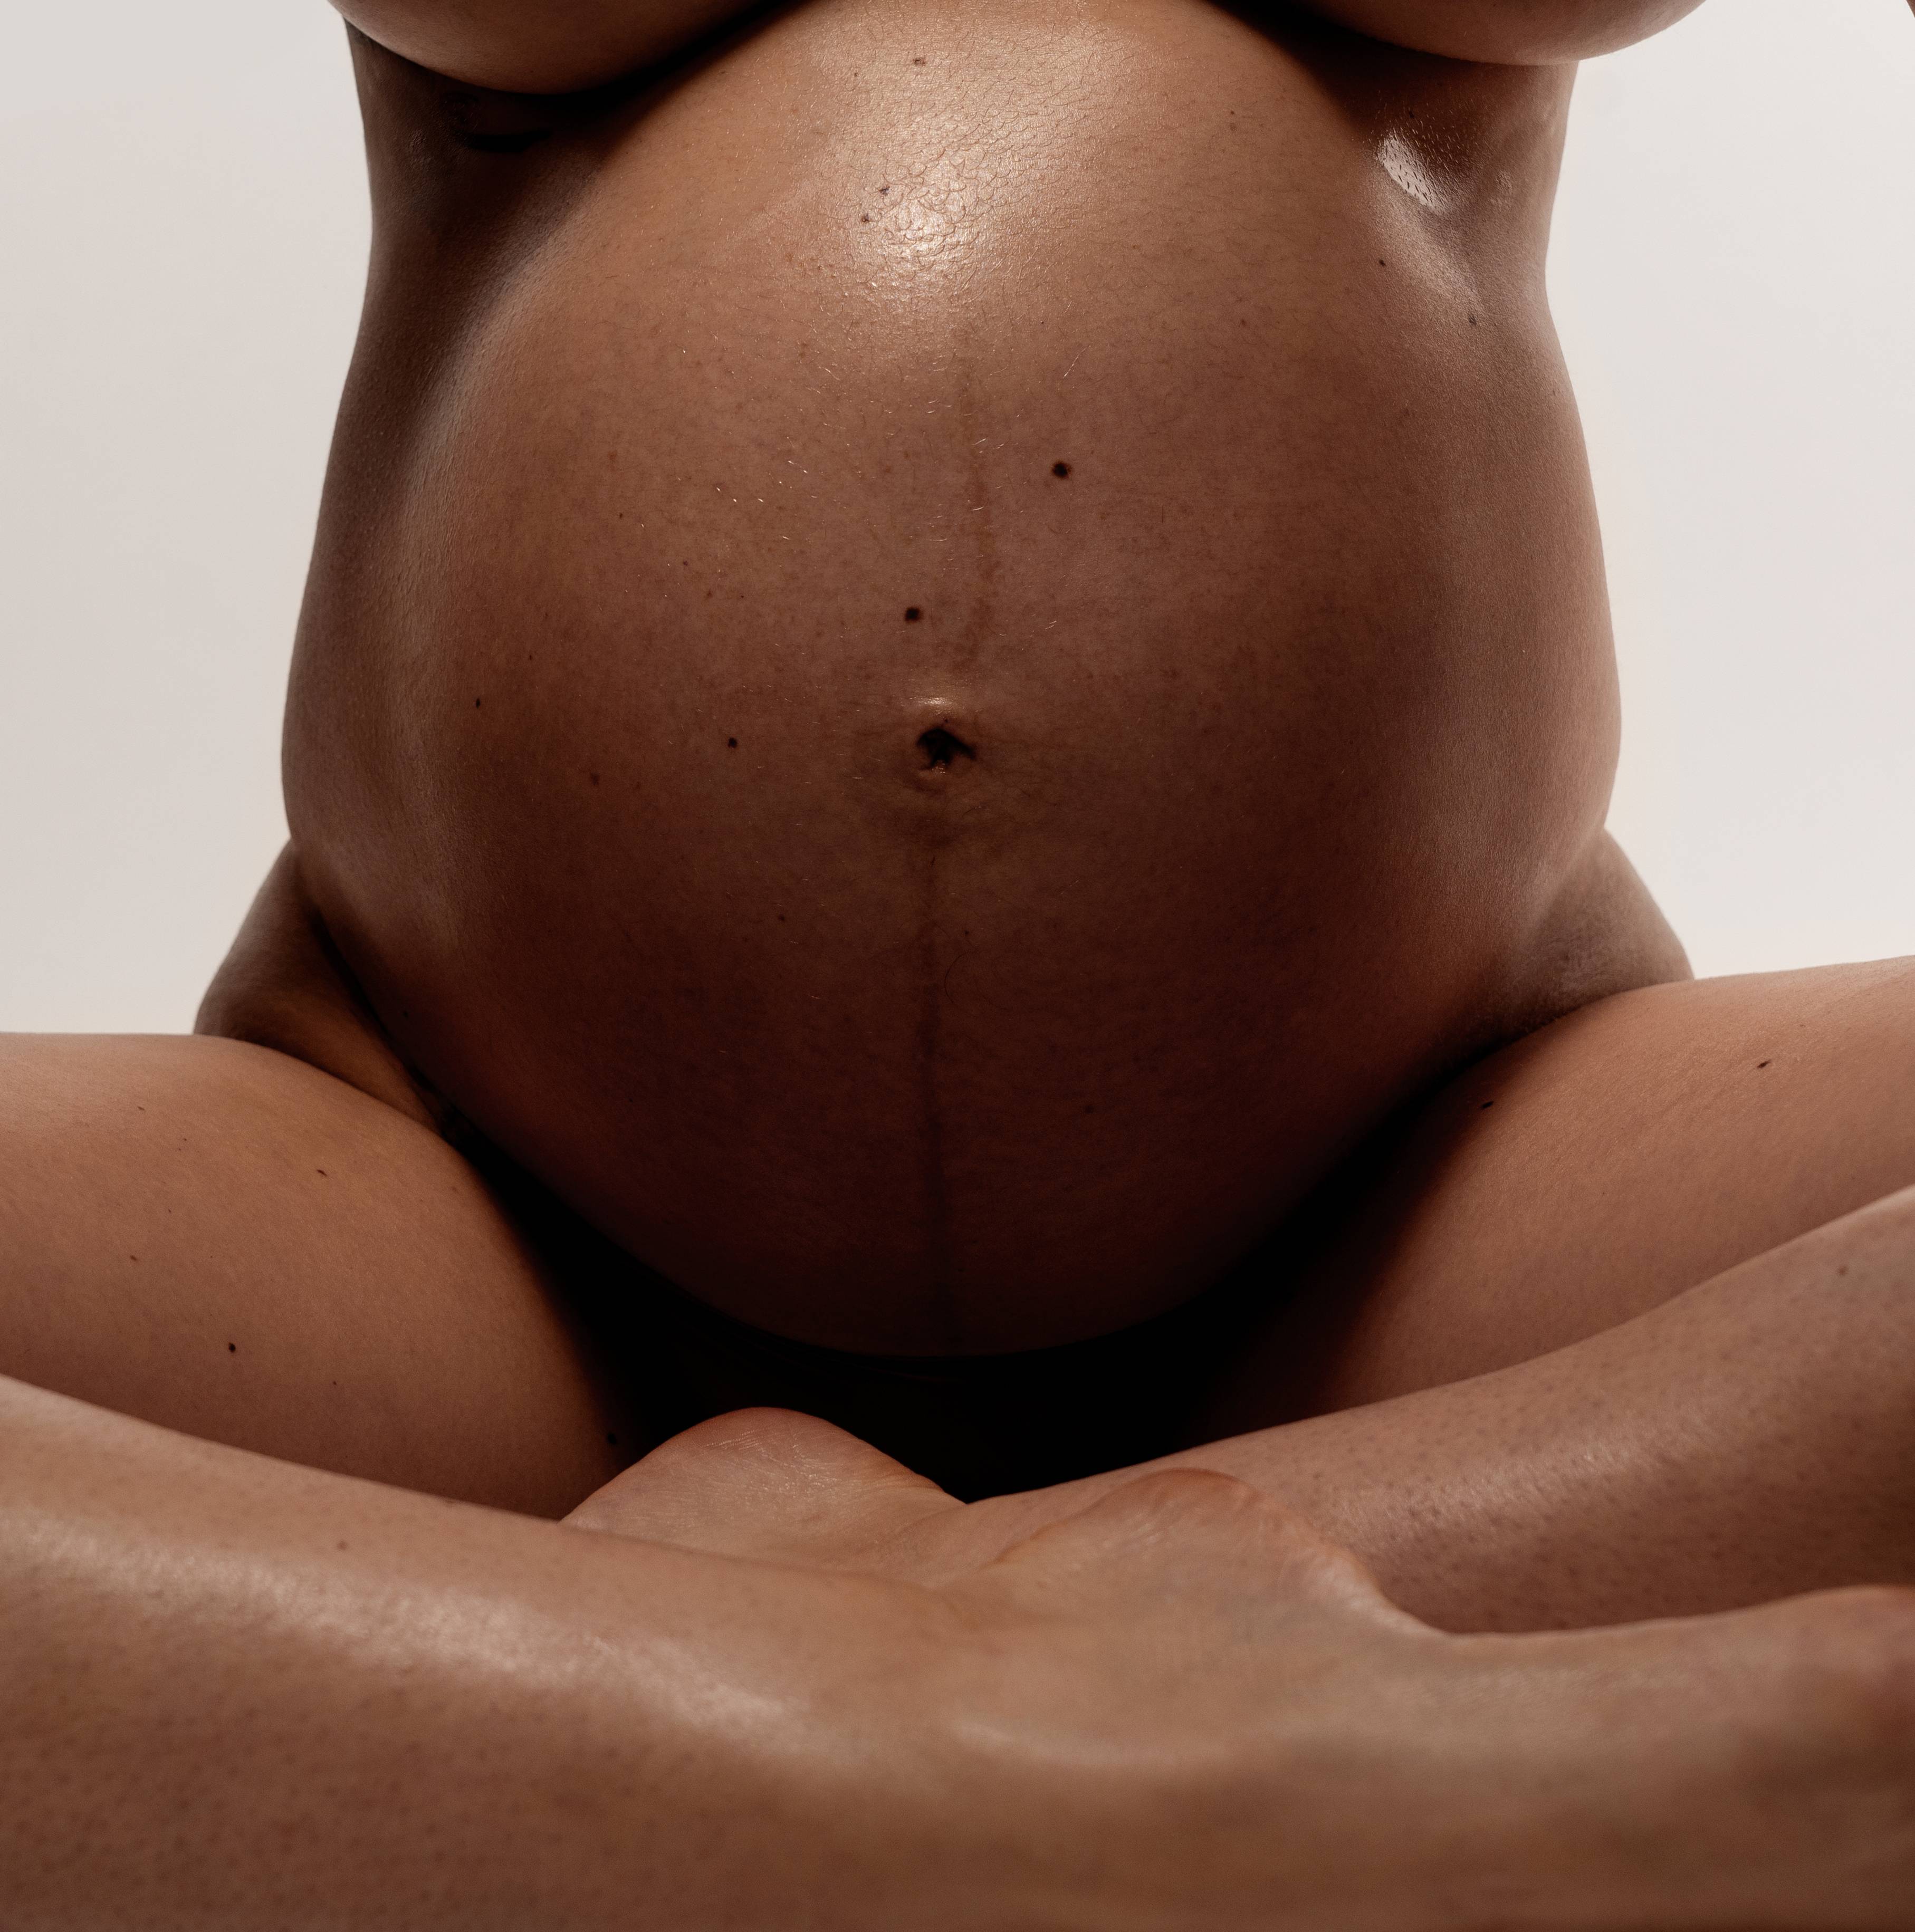 brian tetzlaff add photo images of pregnant nipples